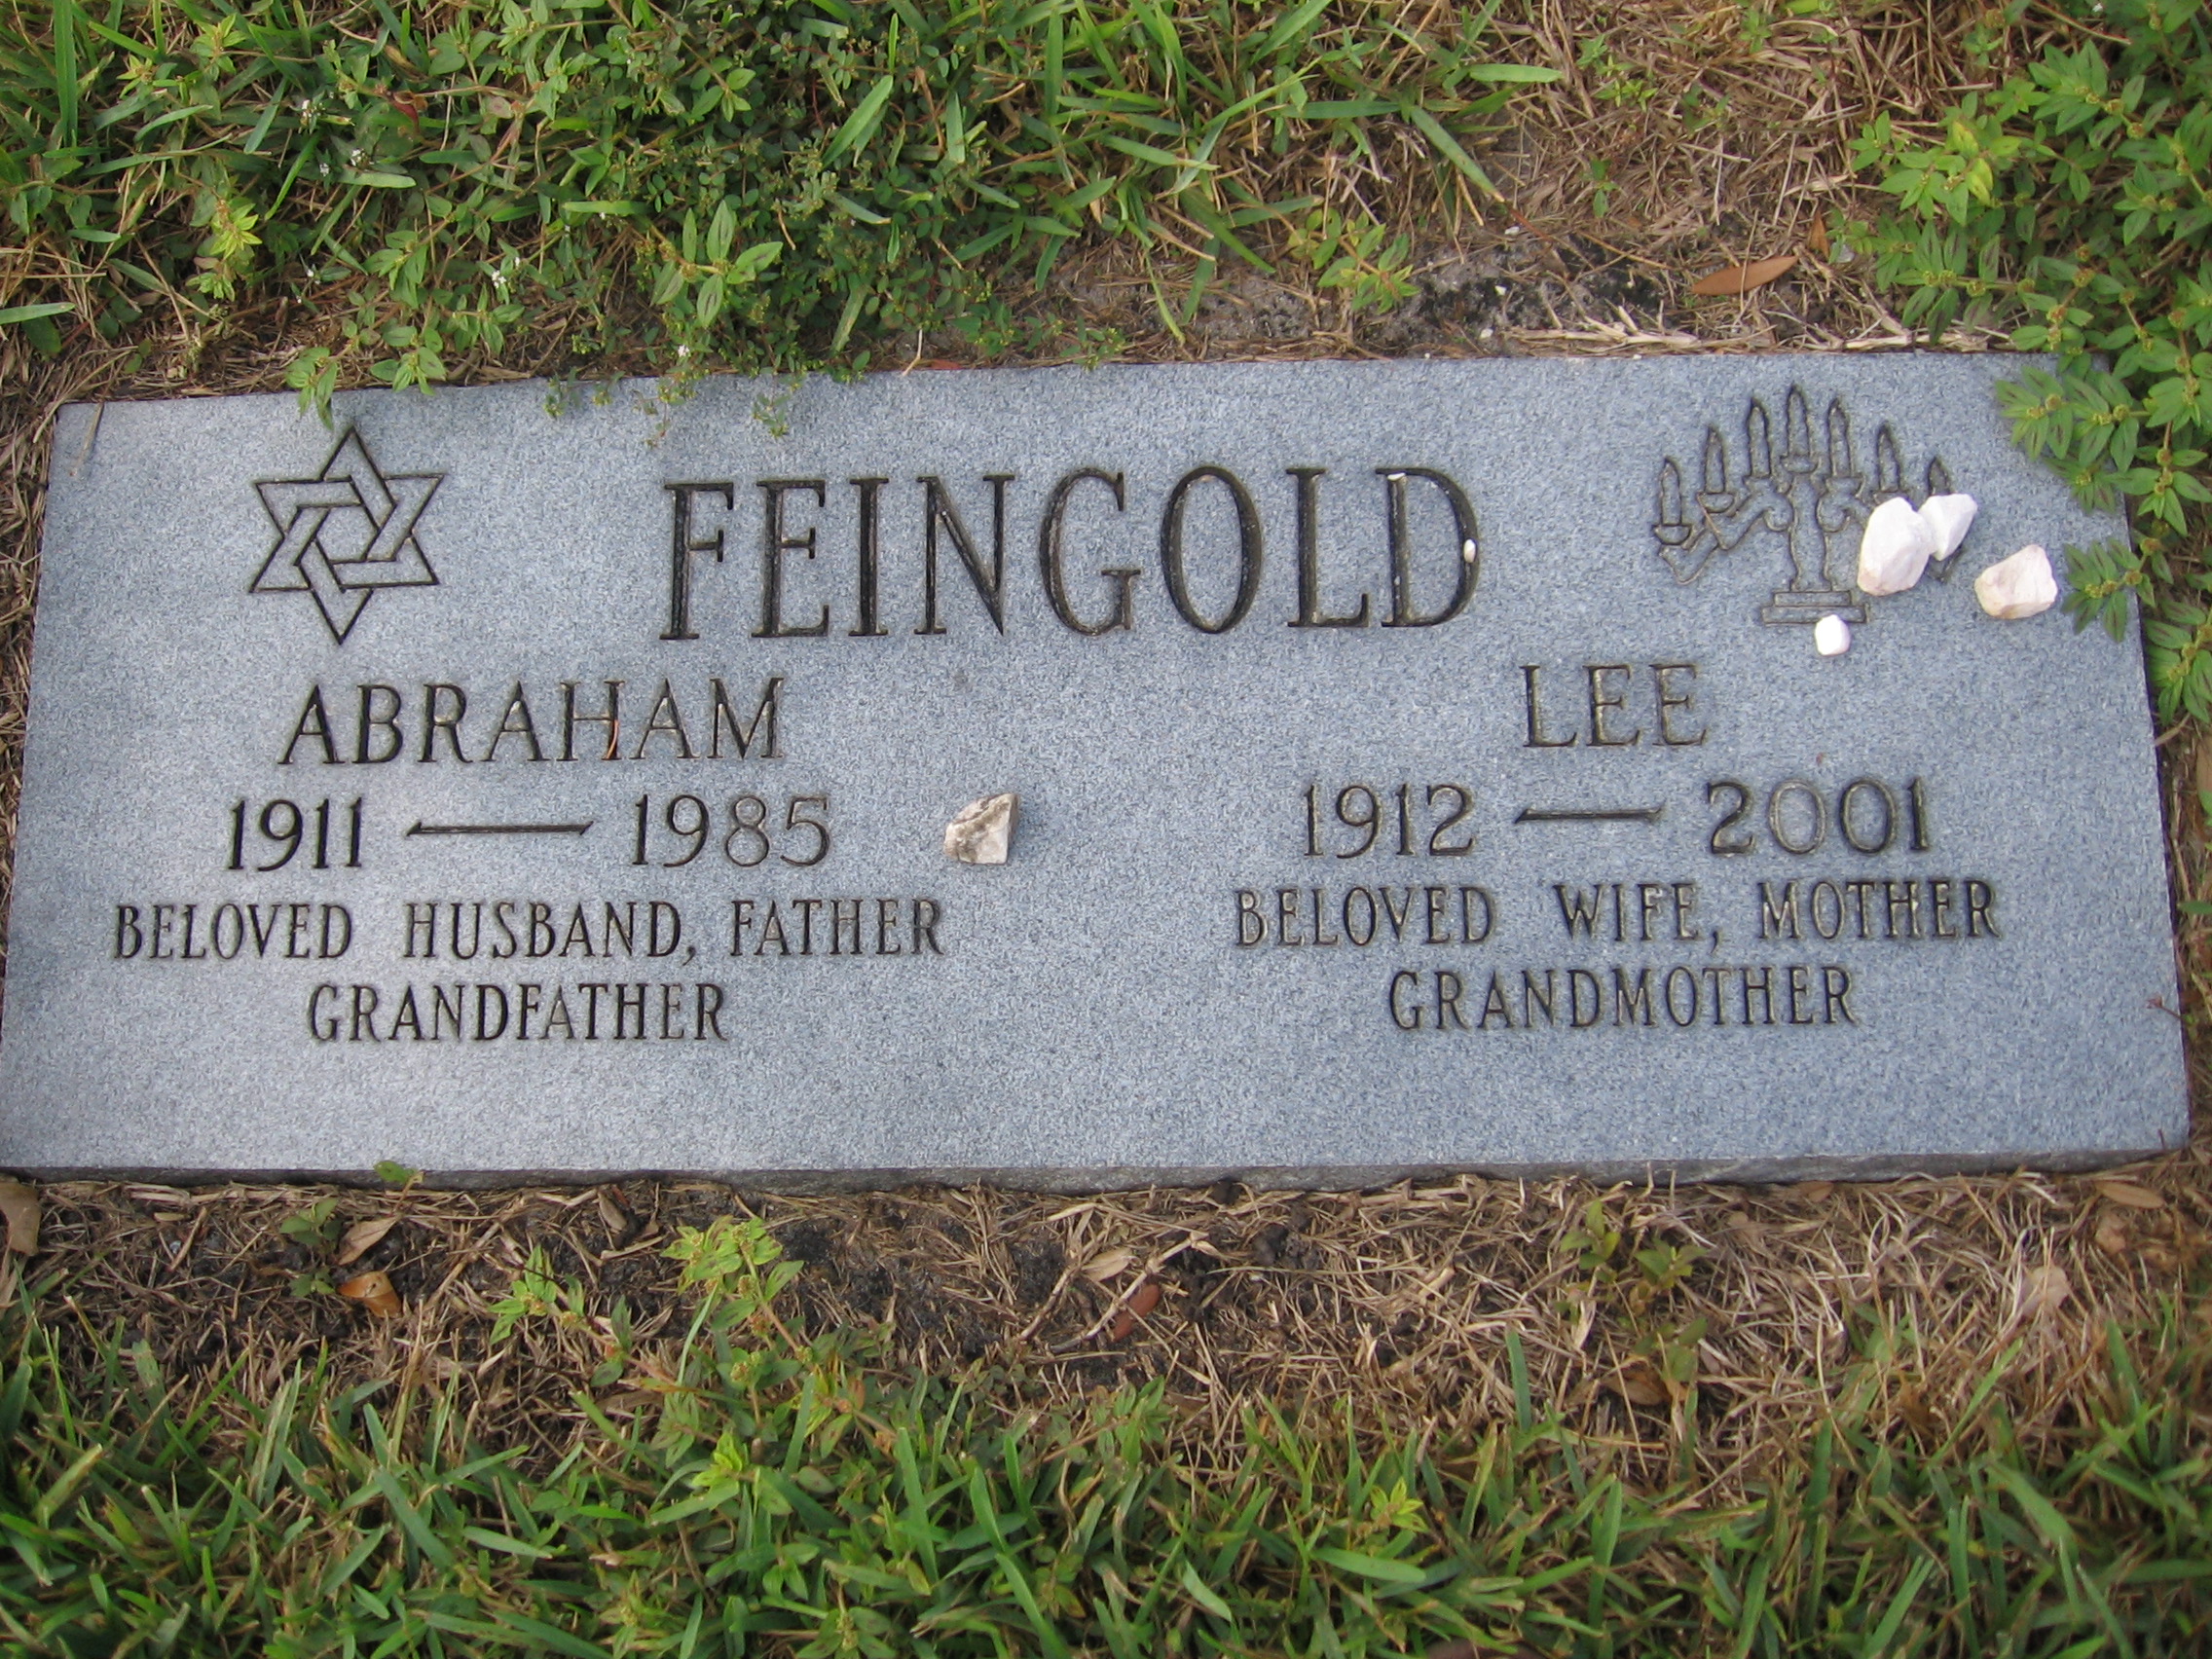 Abraham Feingold